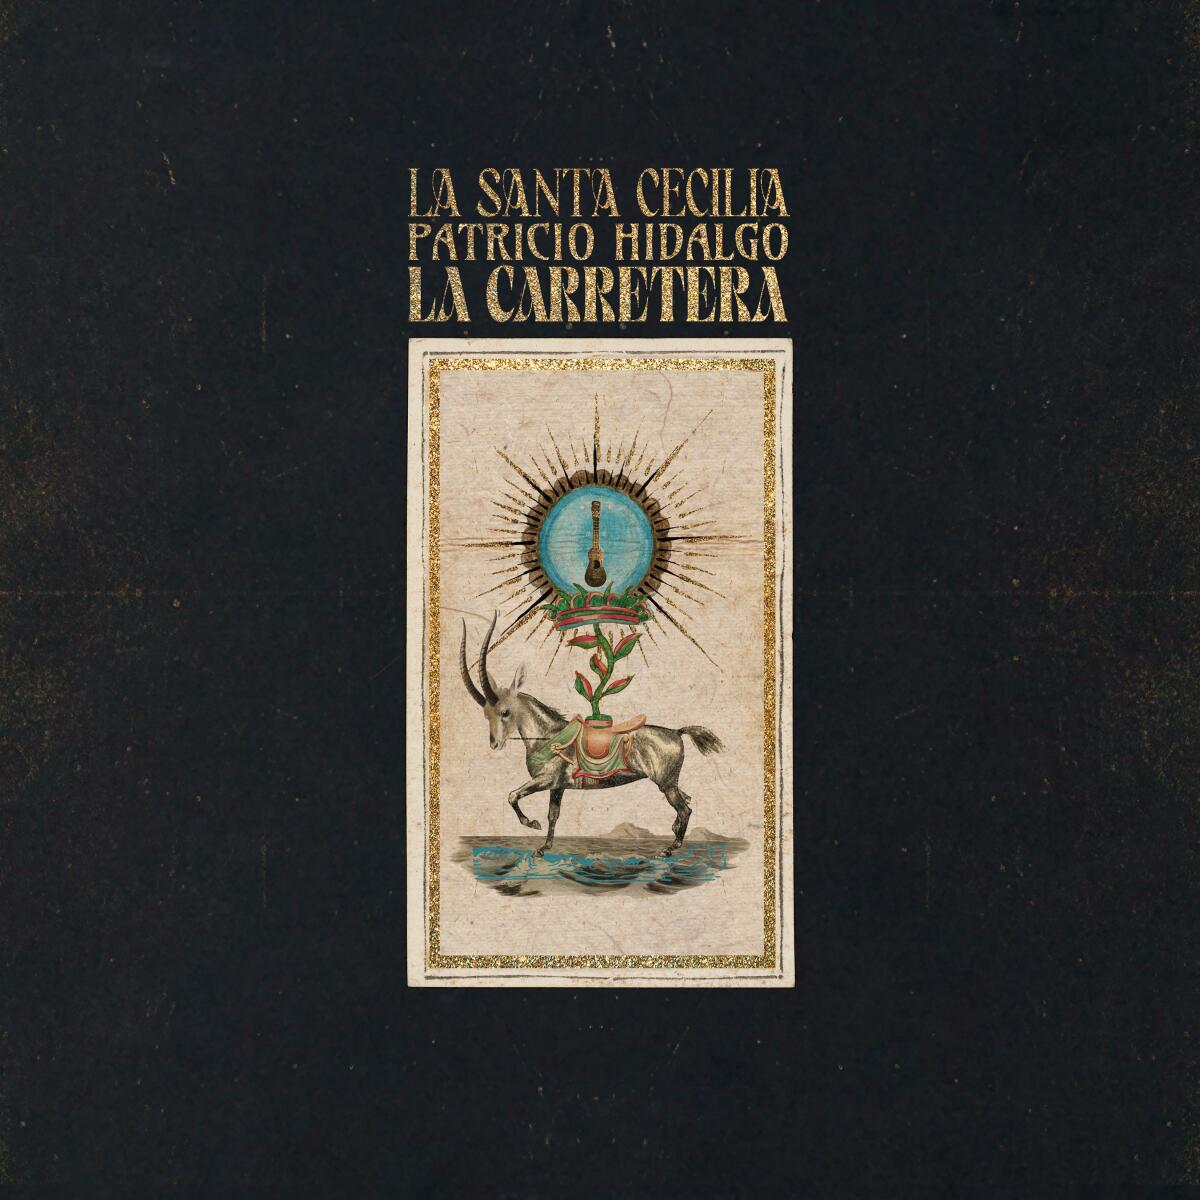 Carátula del sencillo "La Carrertera", de La Santa Cecilia.